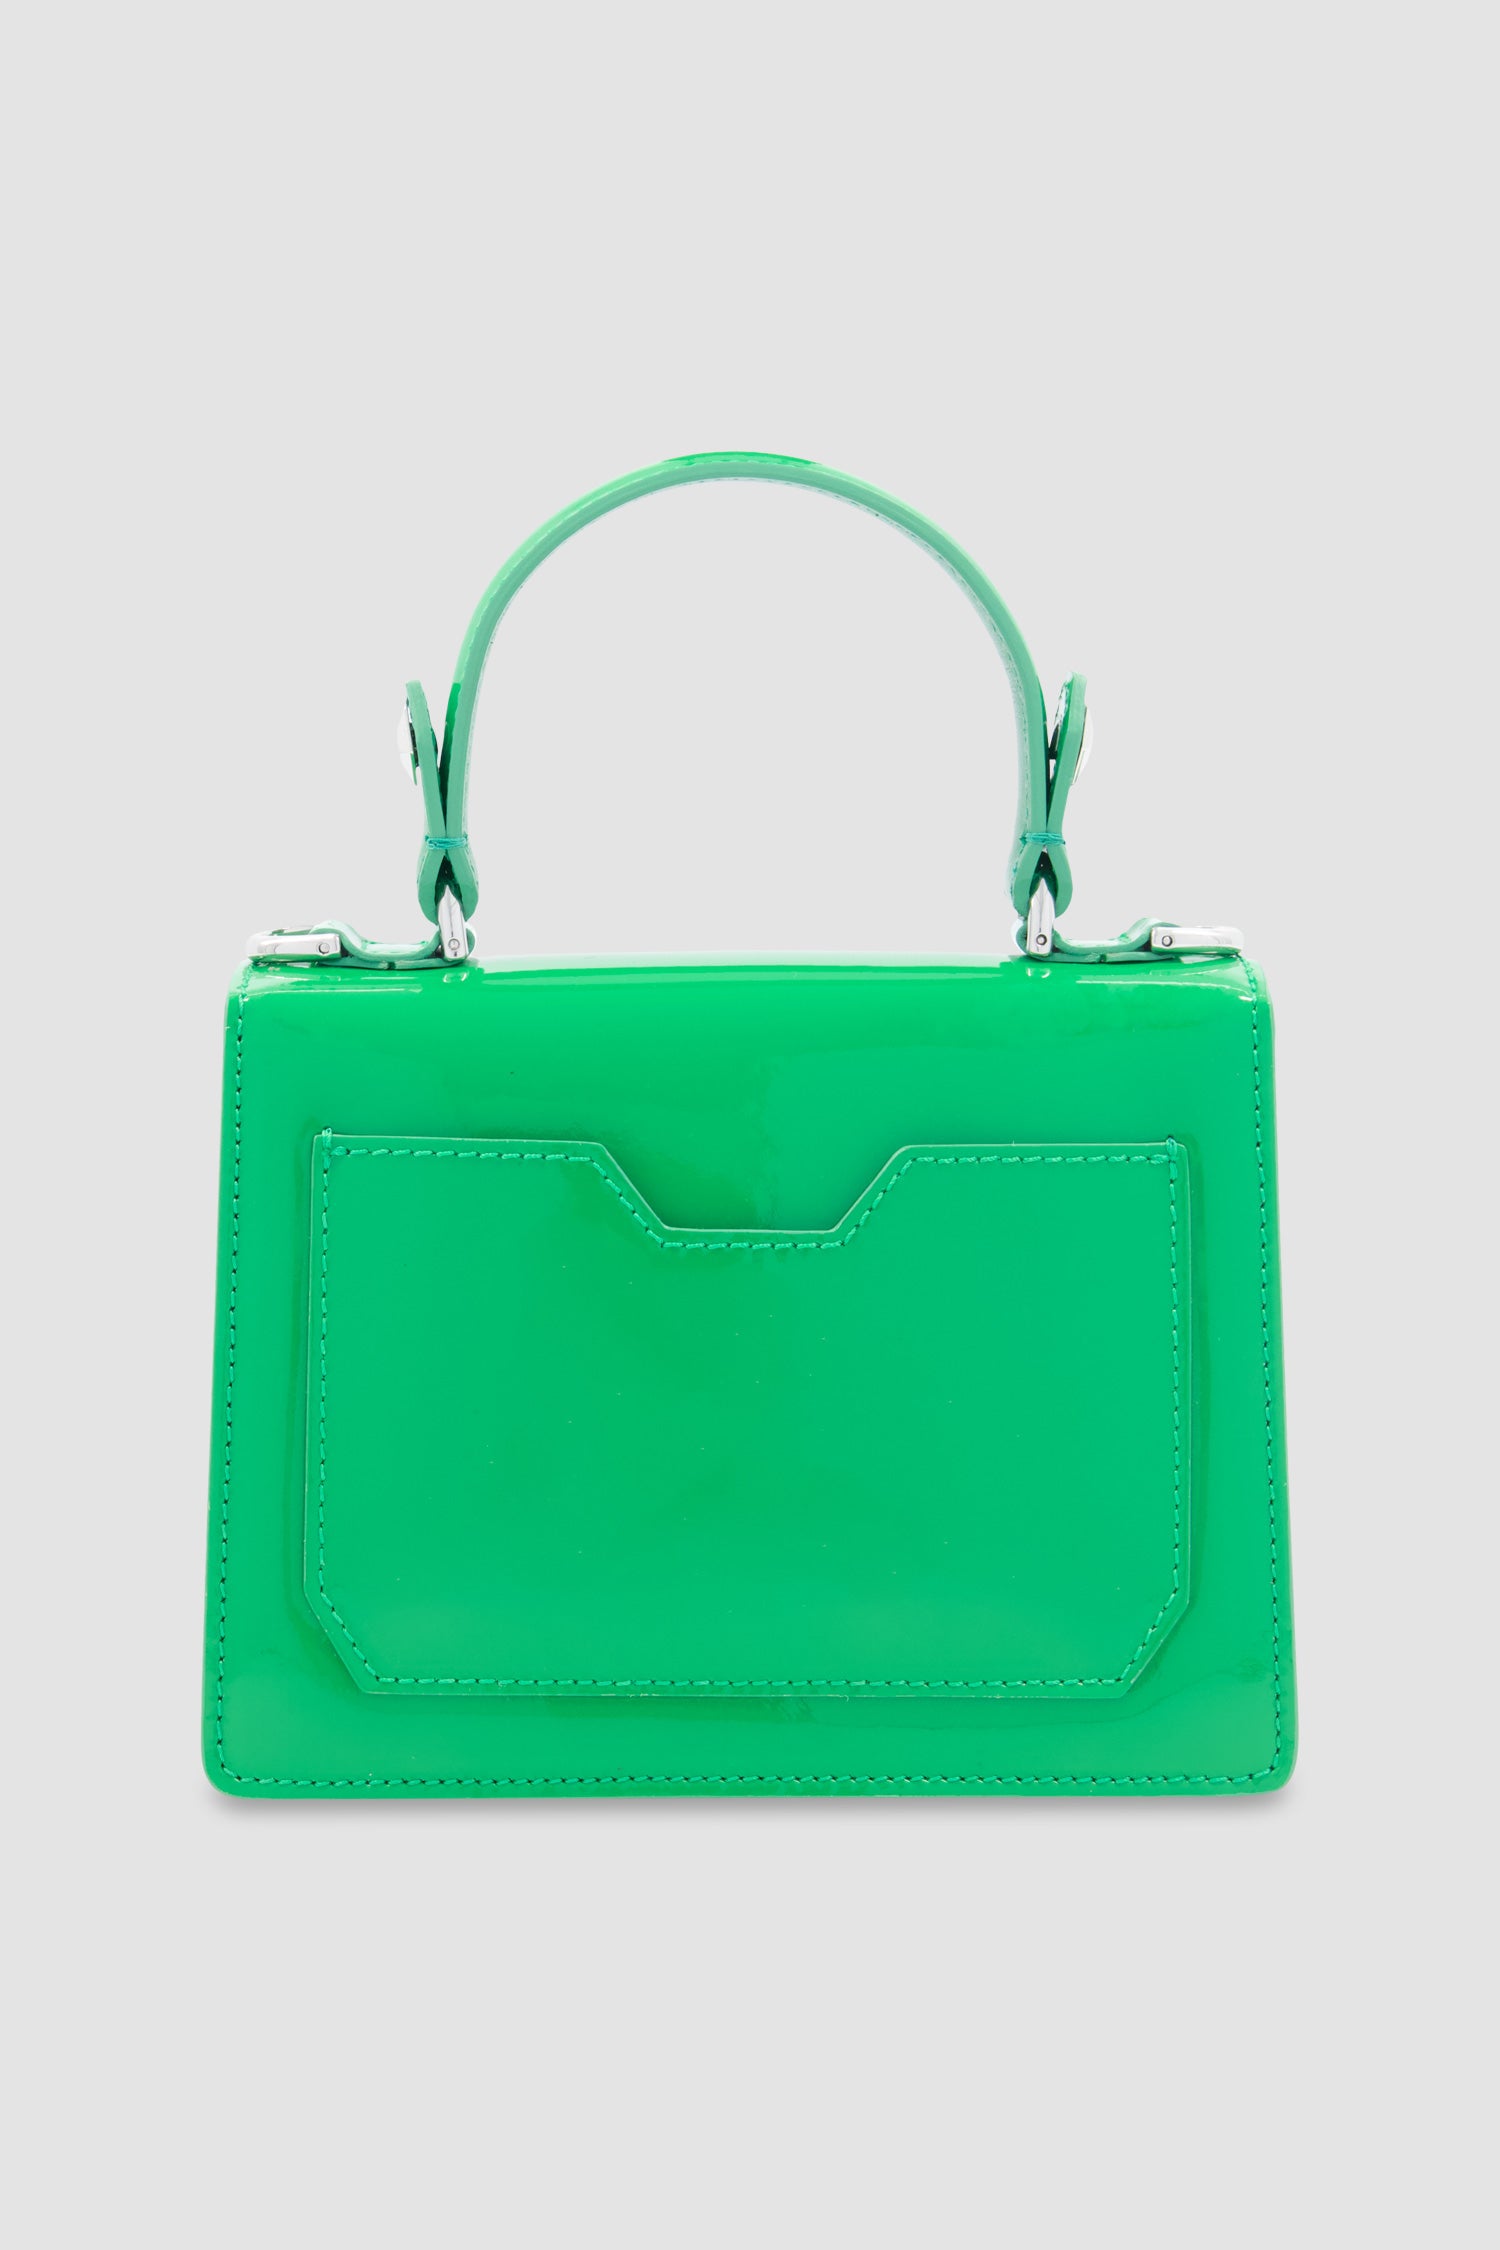 Philipp Plein Green Leather Small Patent Superheroine Handle Bag